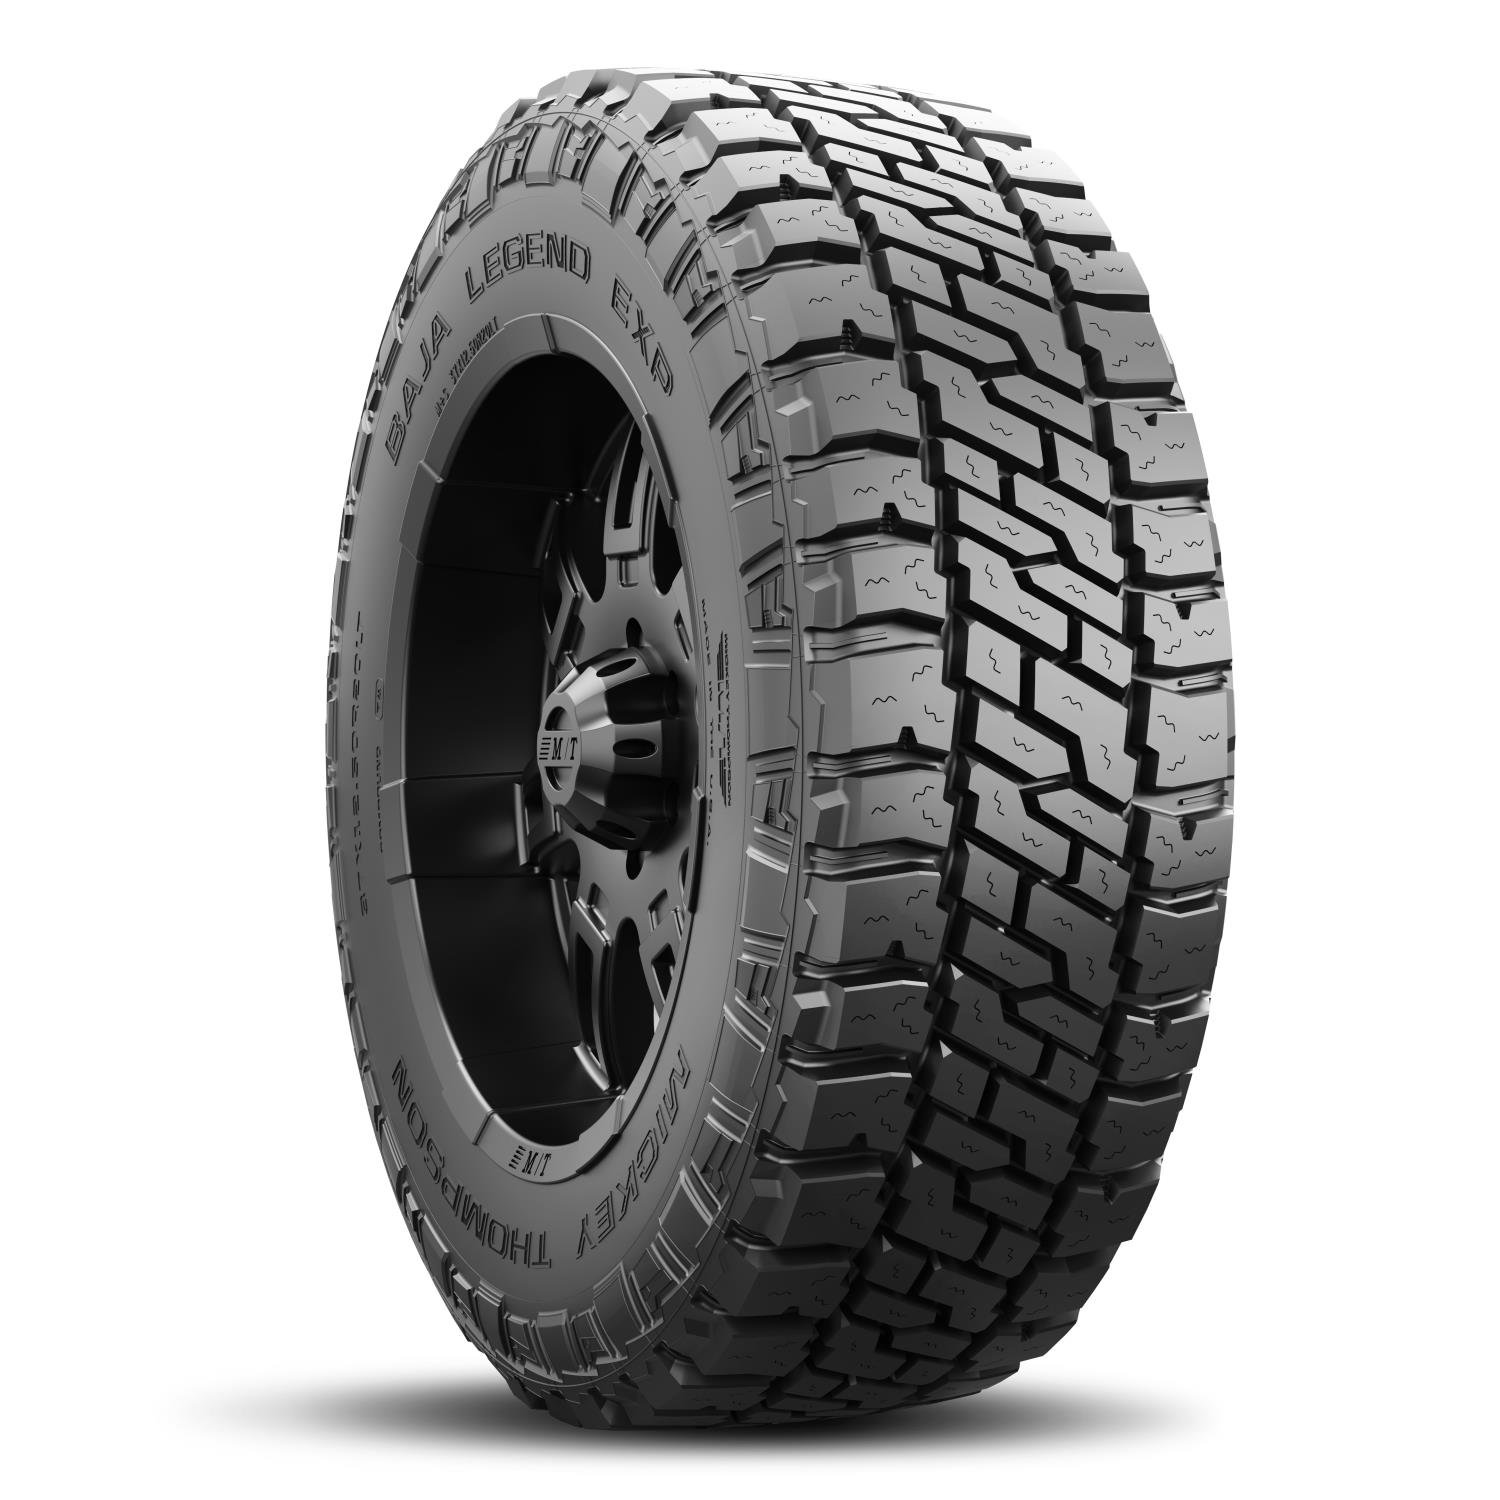 Baja Legend EXP Tire LT295/55R20